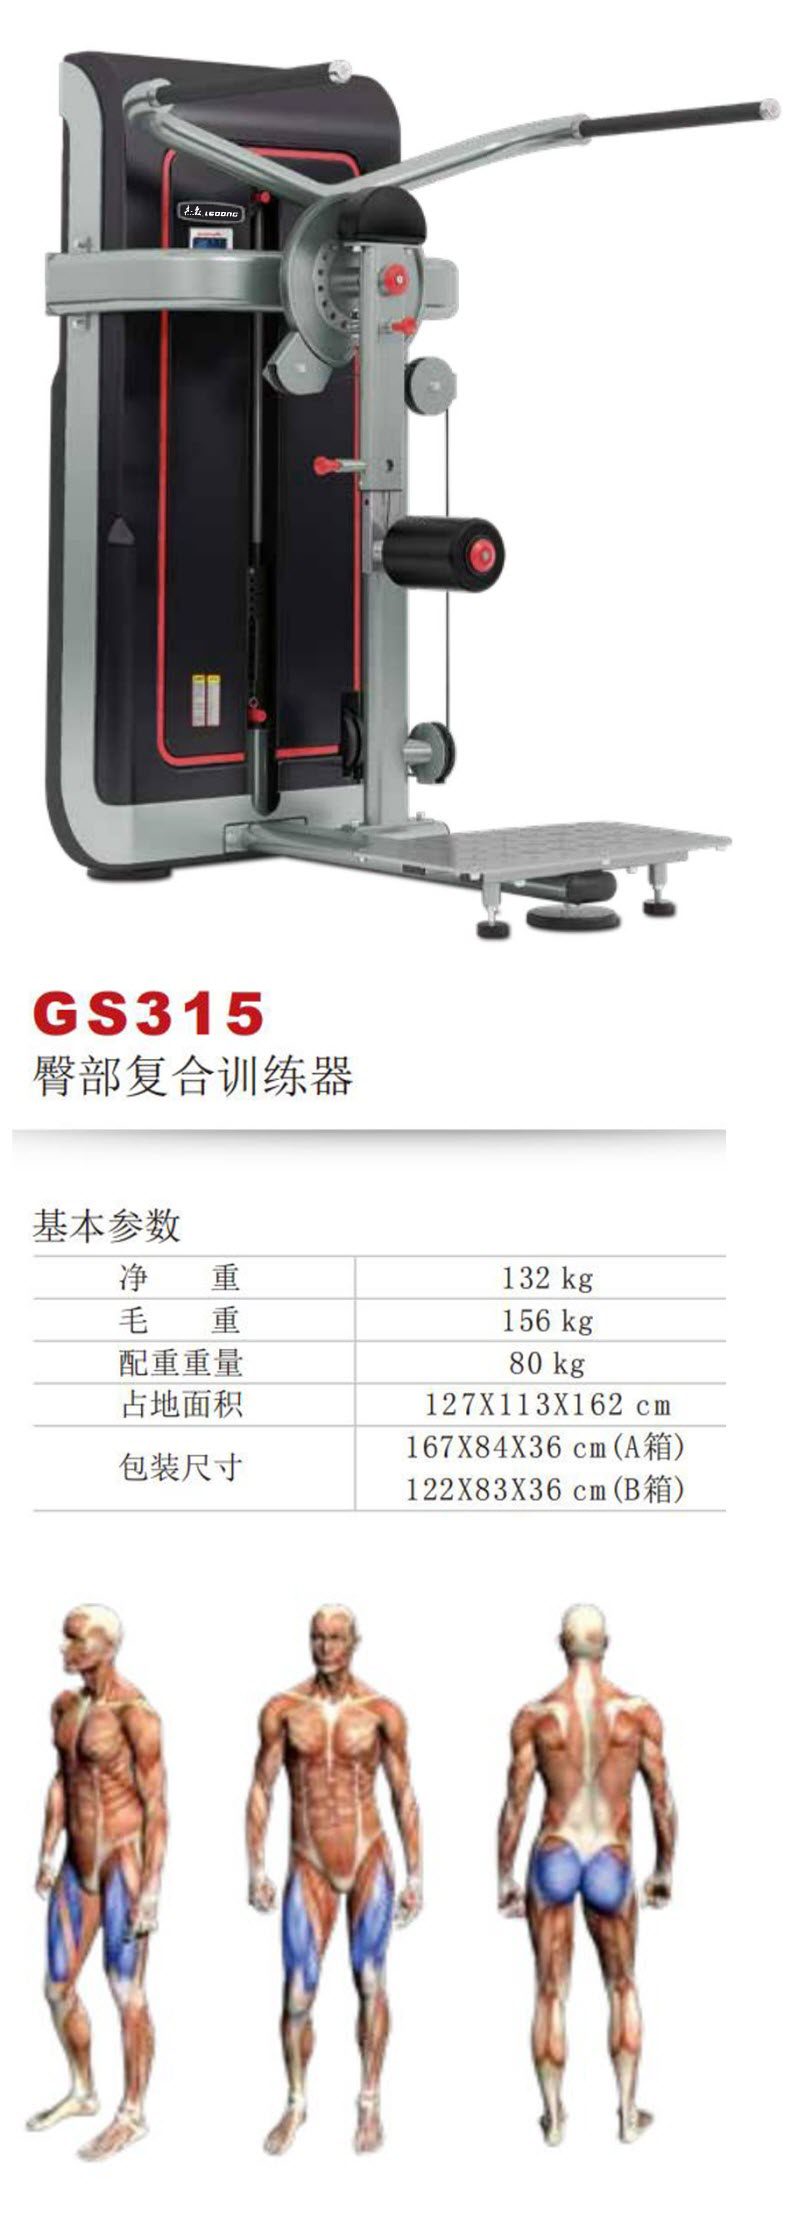 GS315S.jpg